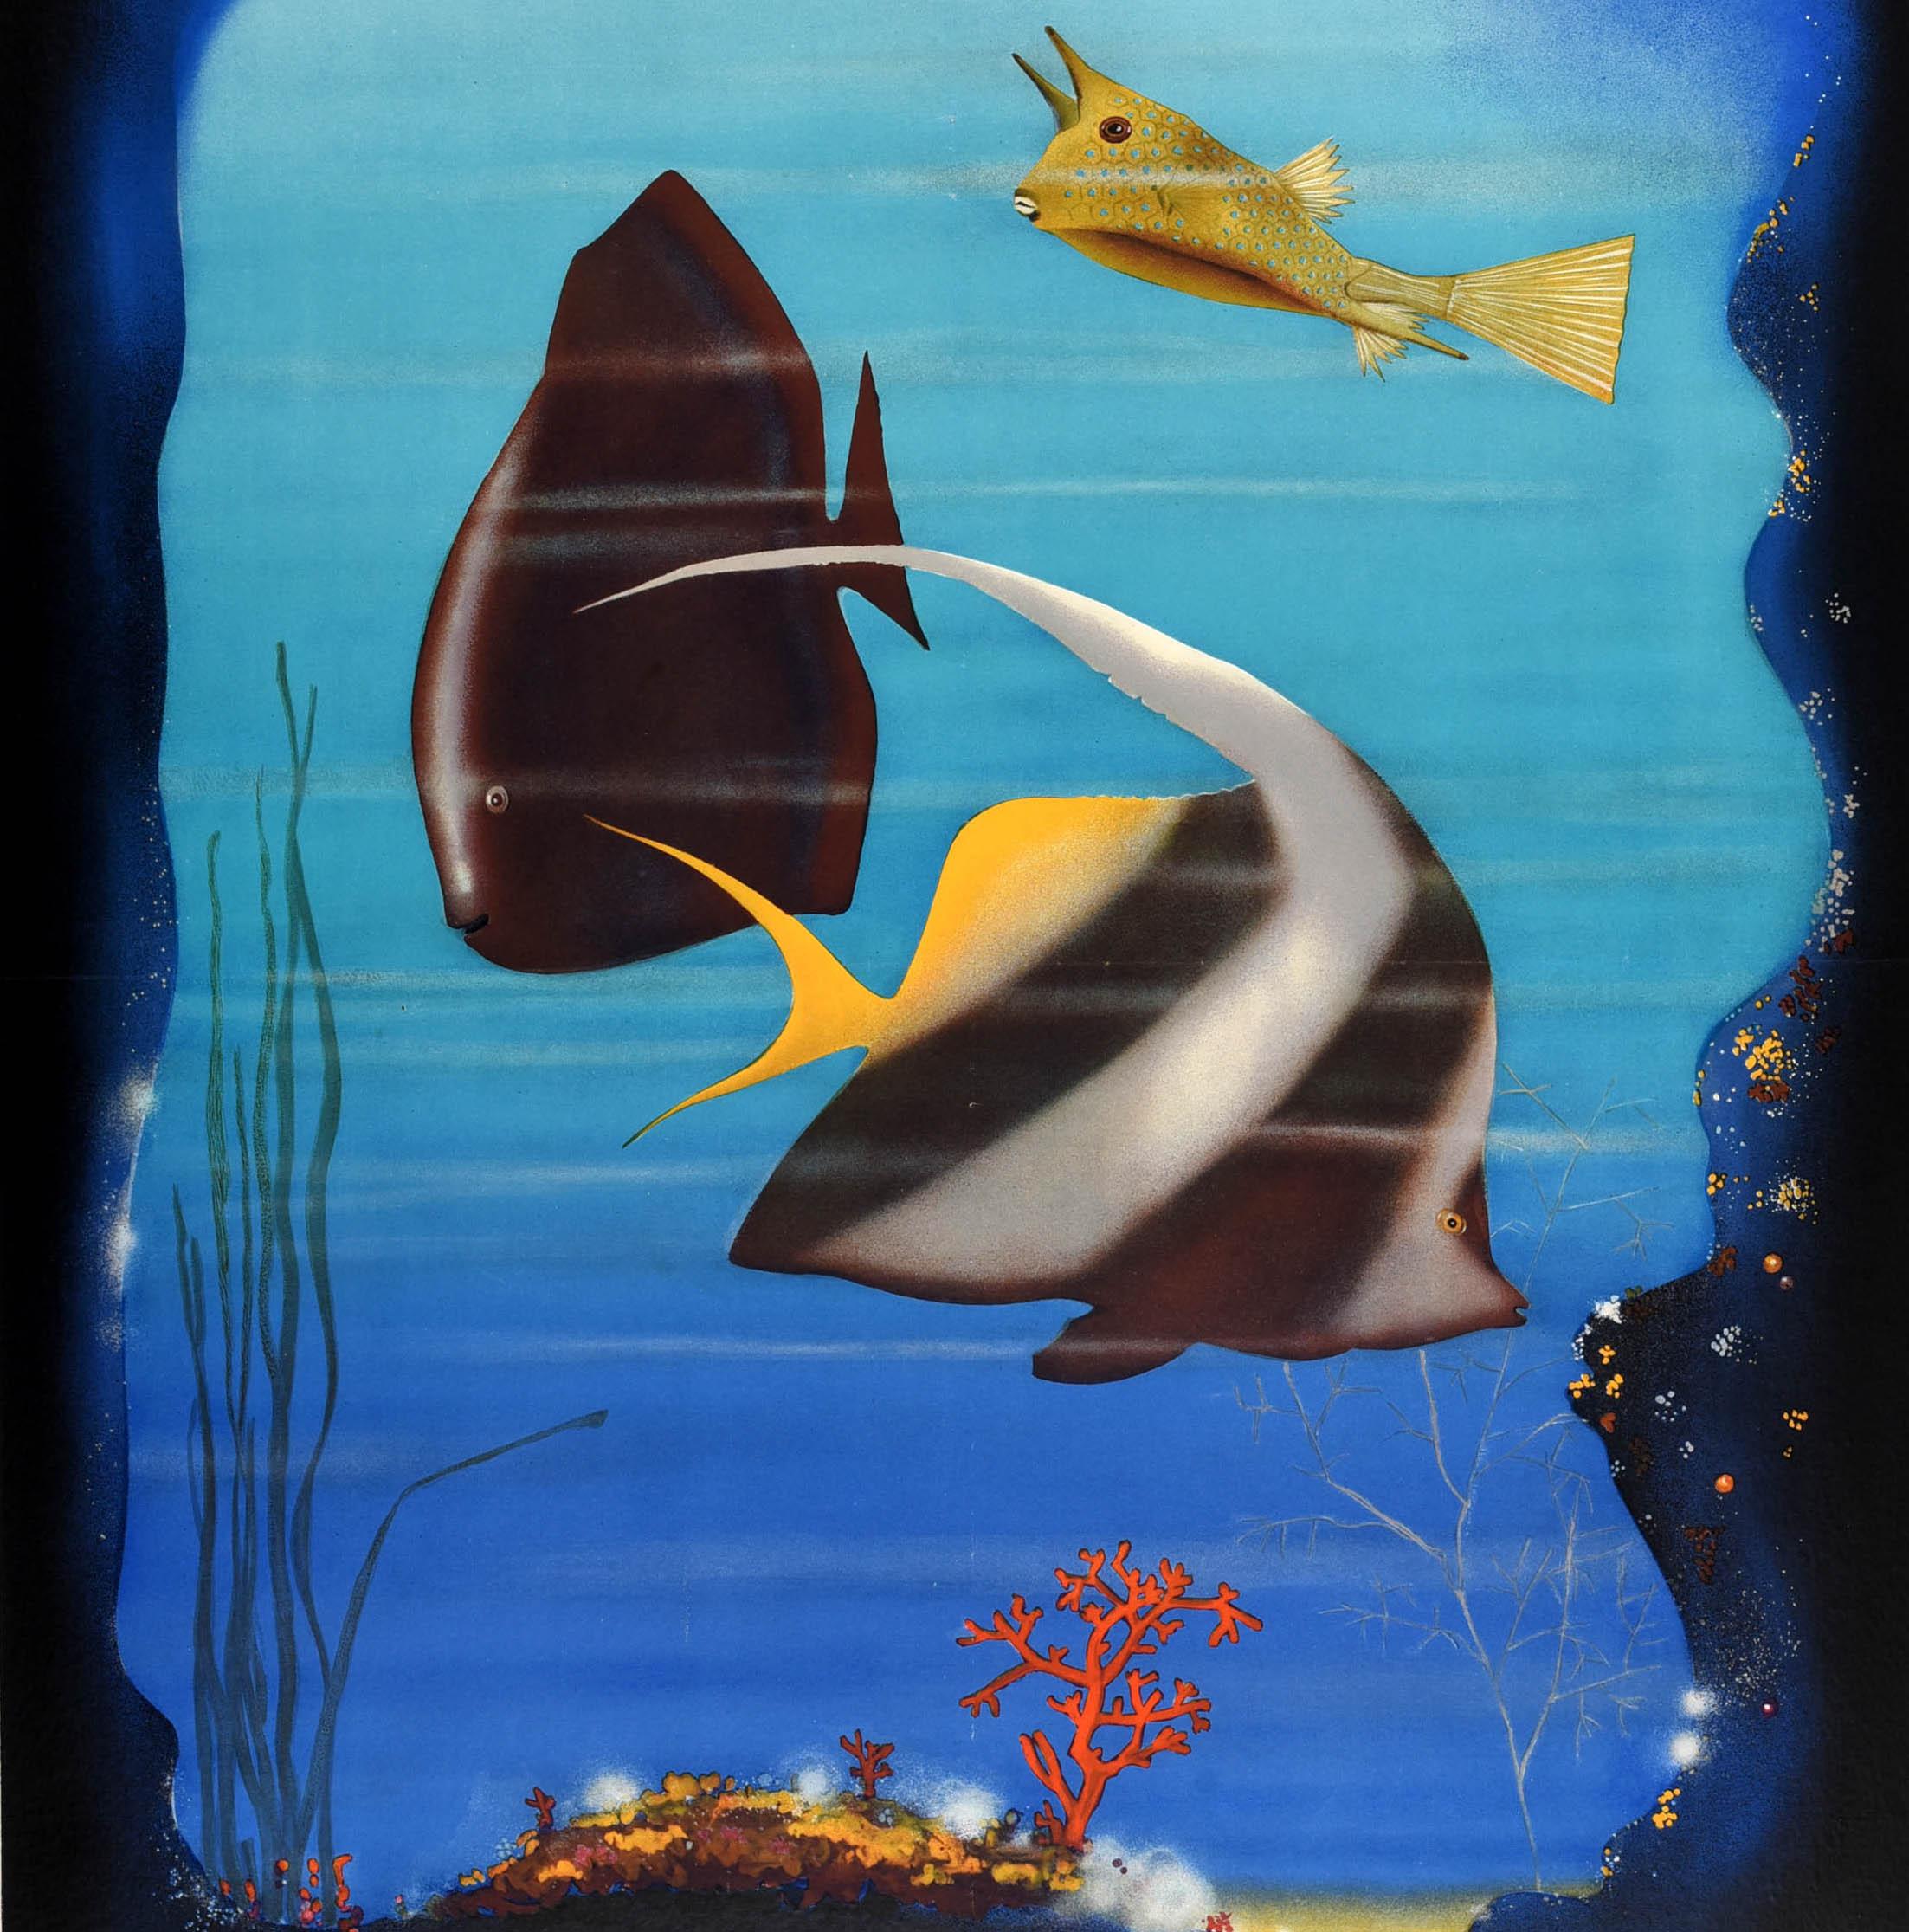 Original Vintage Travel Poster Advertising Monaco Aquarium Art Deco Ocean Museum - Print by Jean Luc